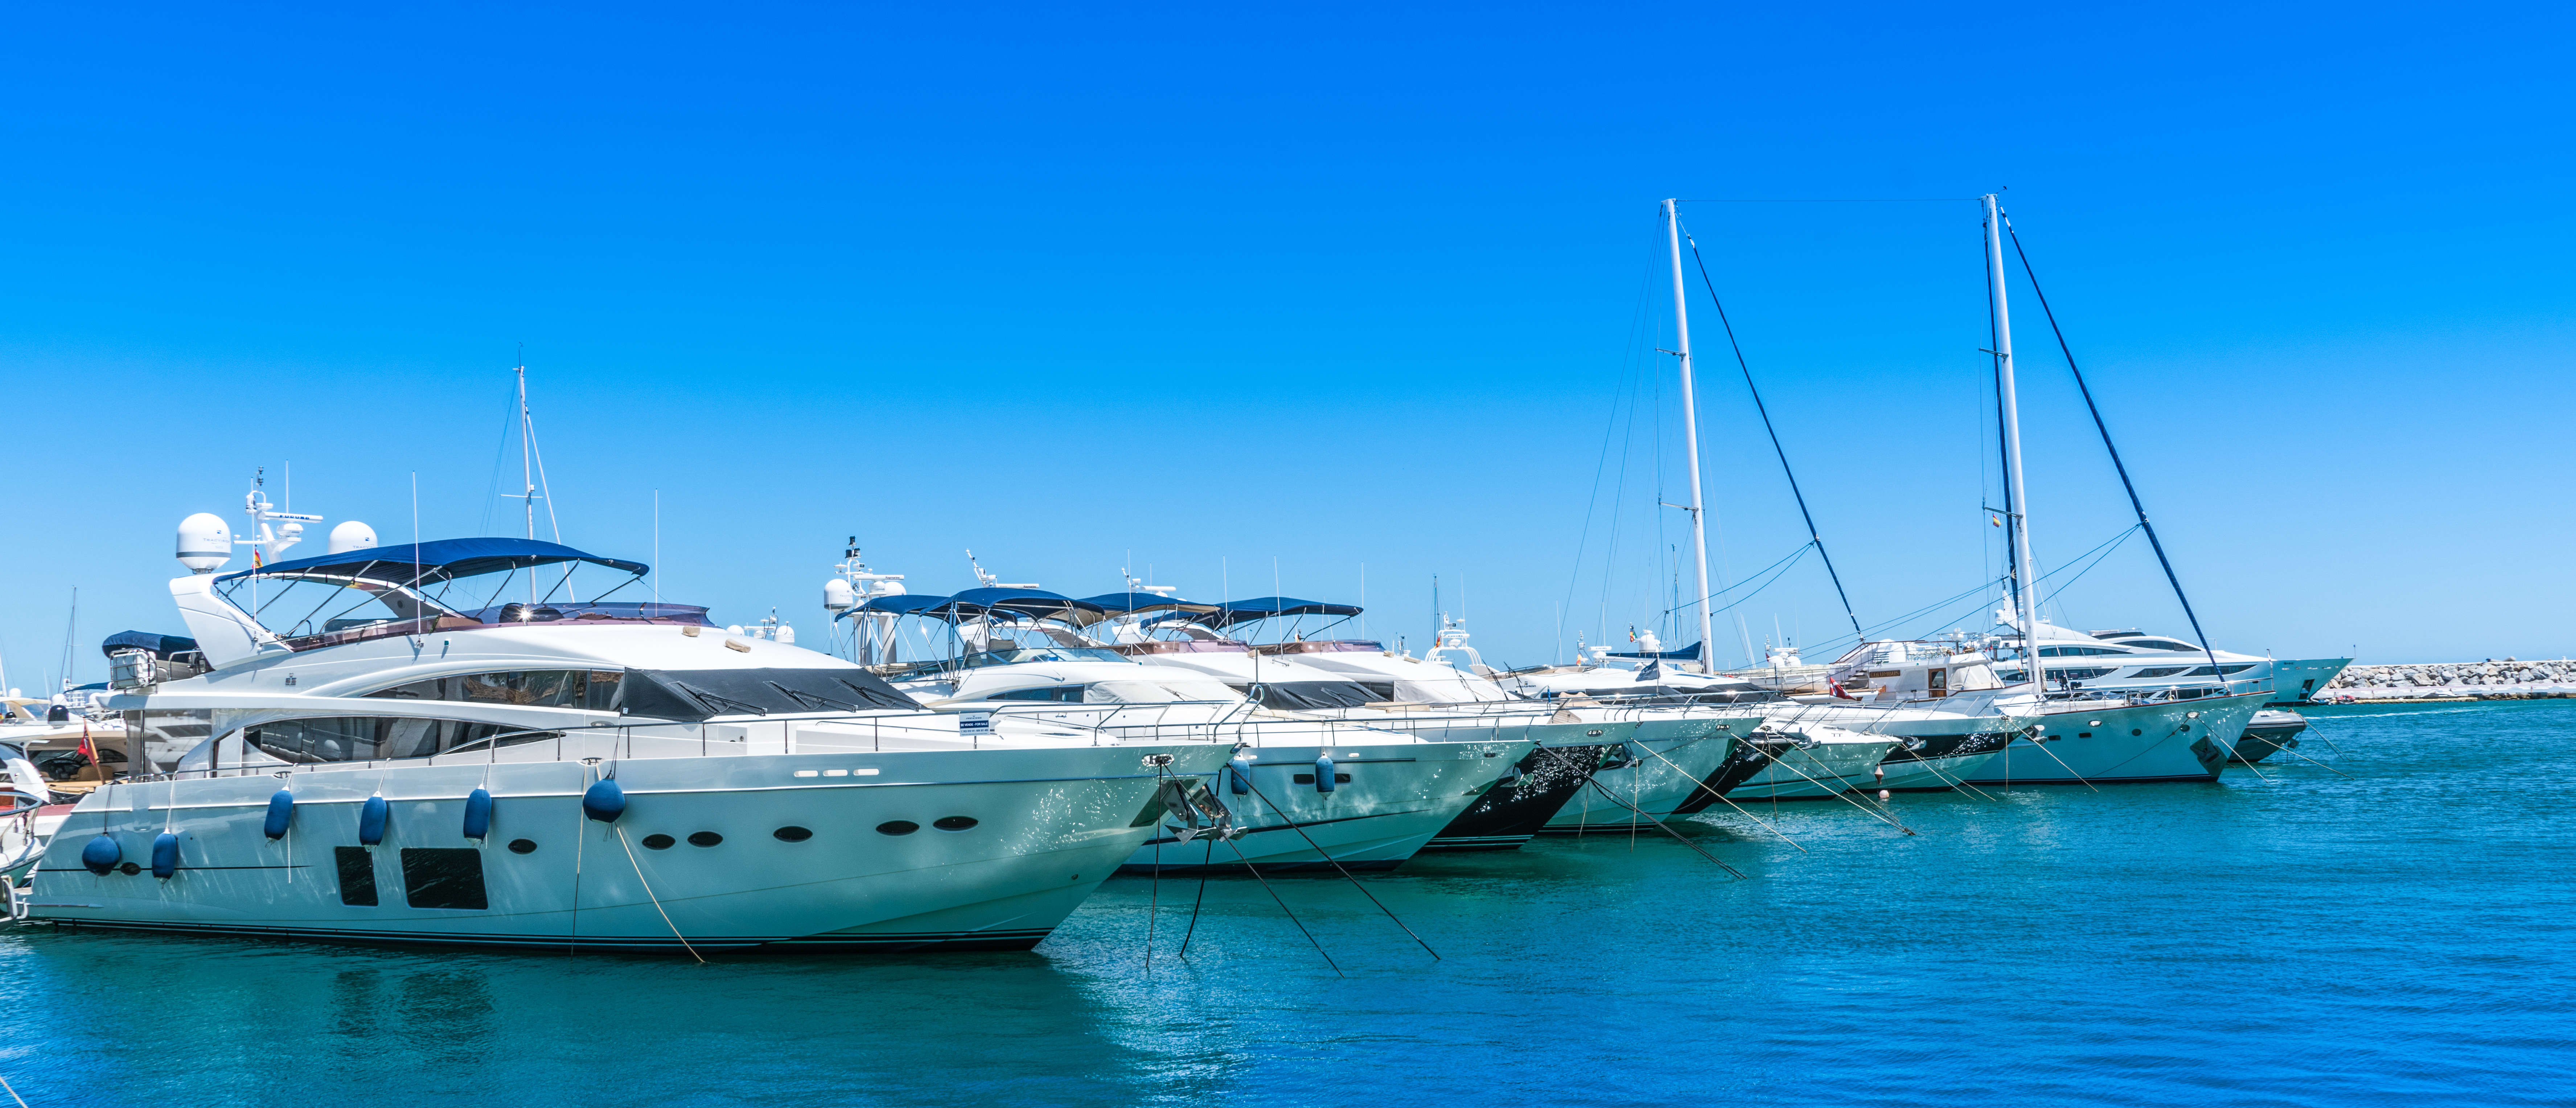 Puerto Banus, Spain, June 28 2017: big luxury yachts in the harbour